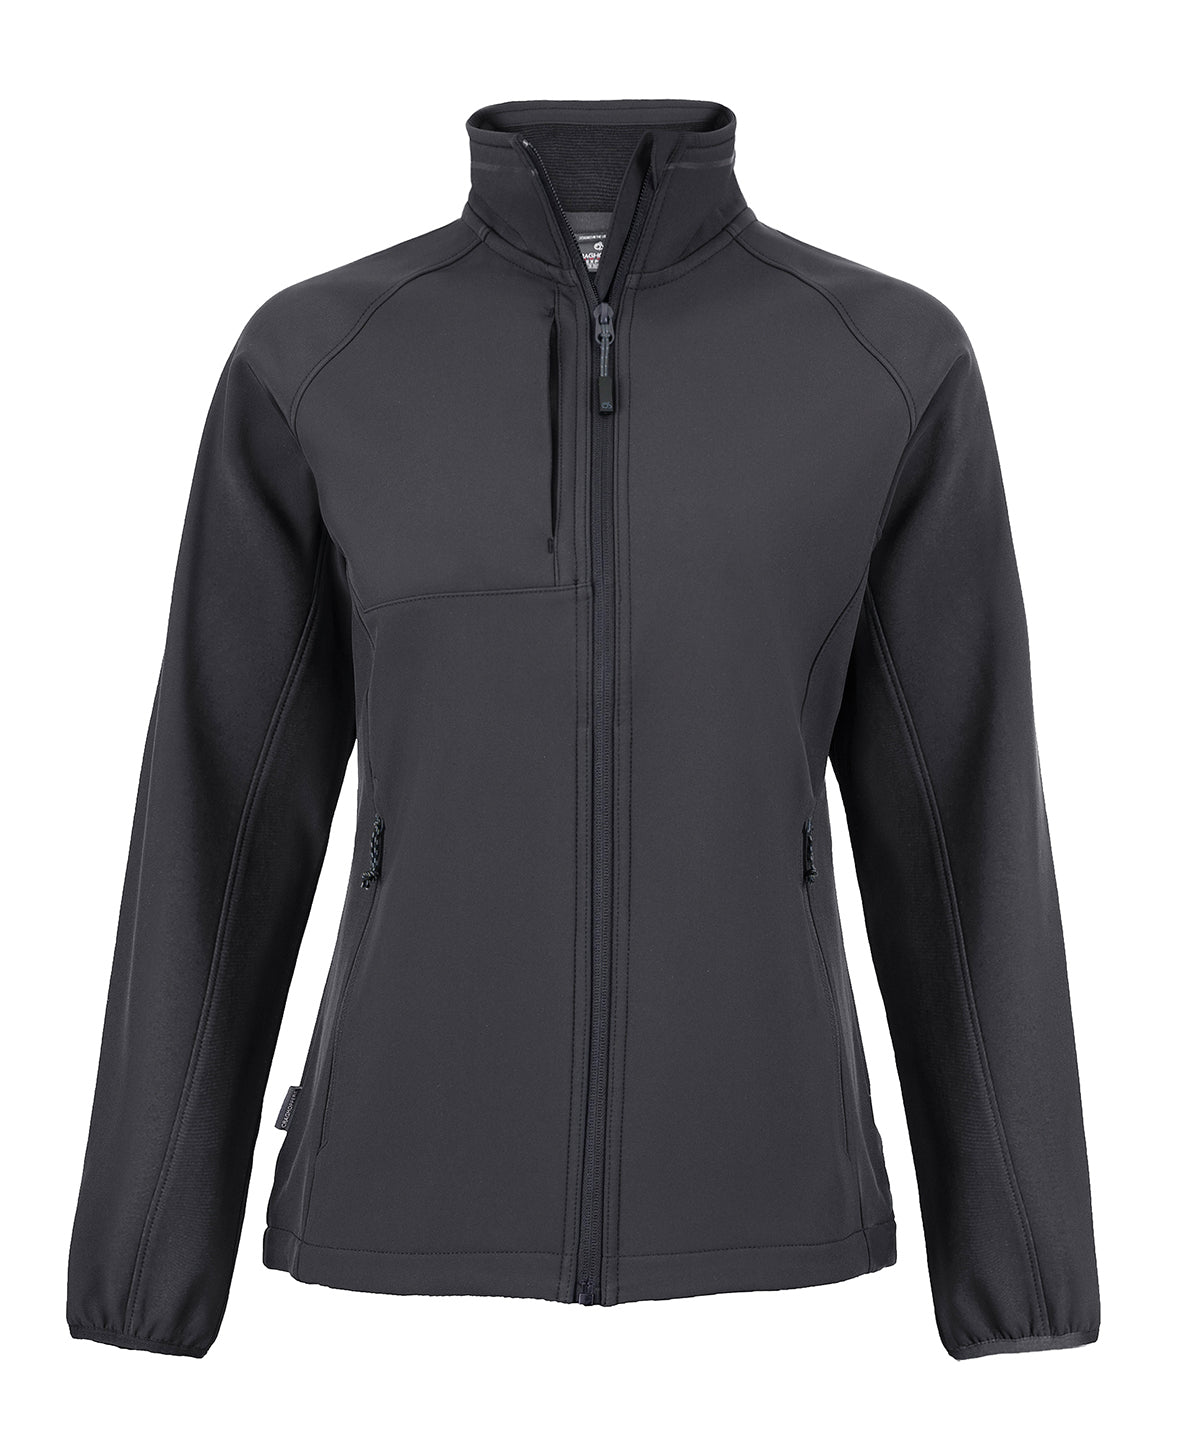 Personalised Jackets - Black Craghoppers Expert women’s Basecamp softshell jacket